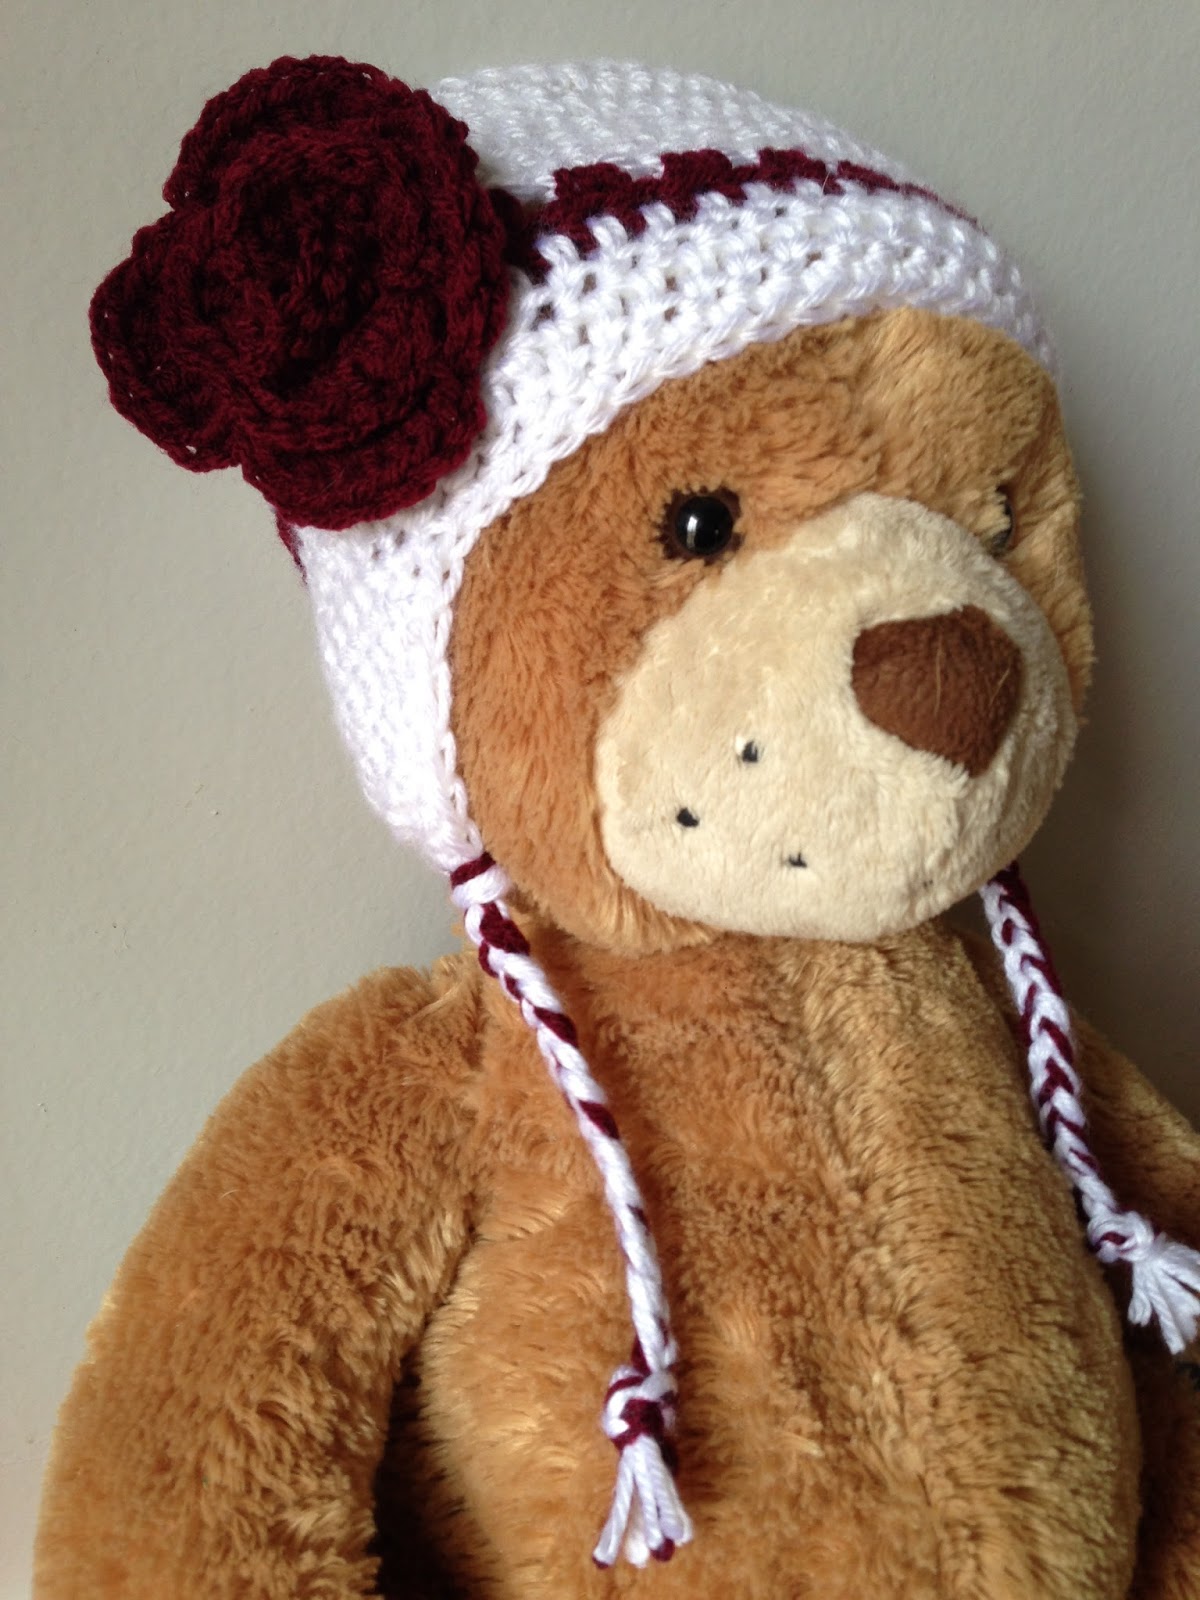 What I Live For: Crochet Winter Hat